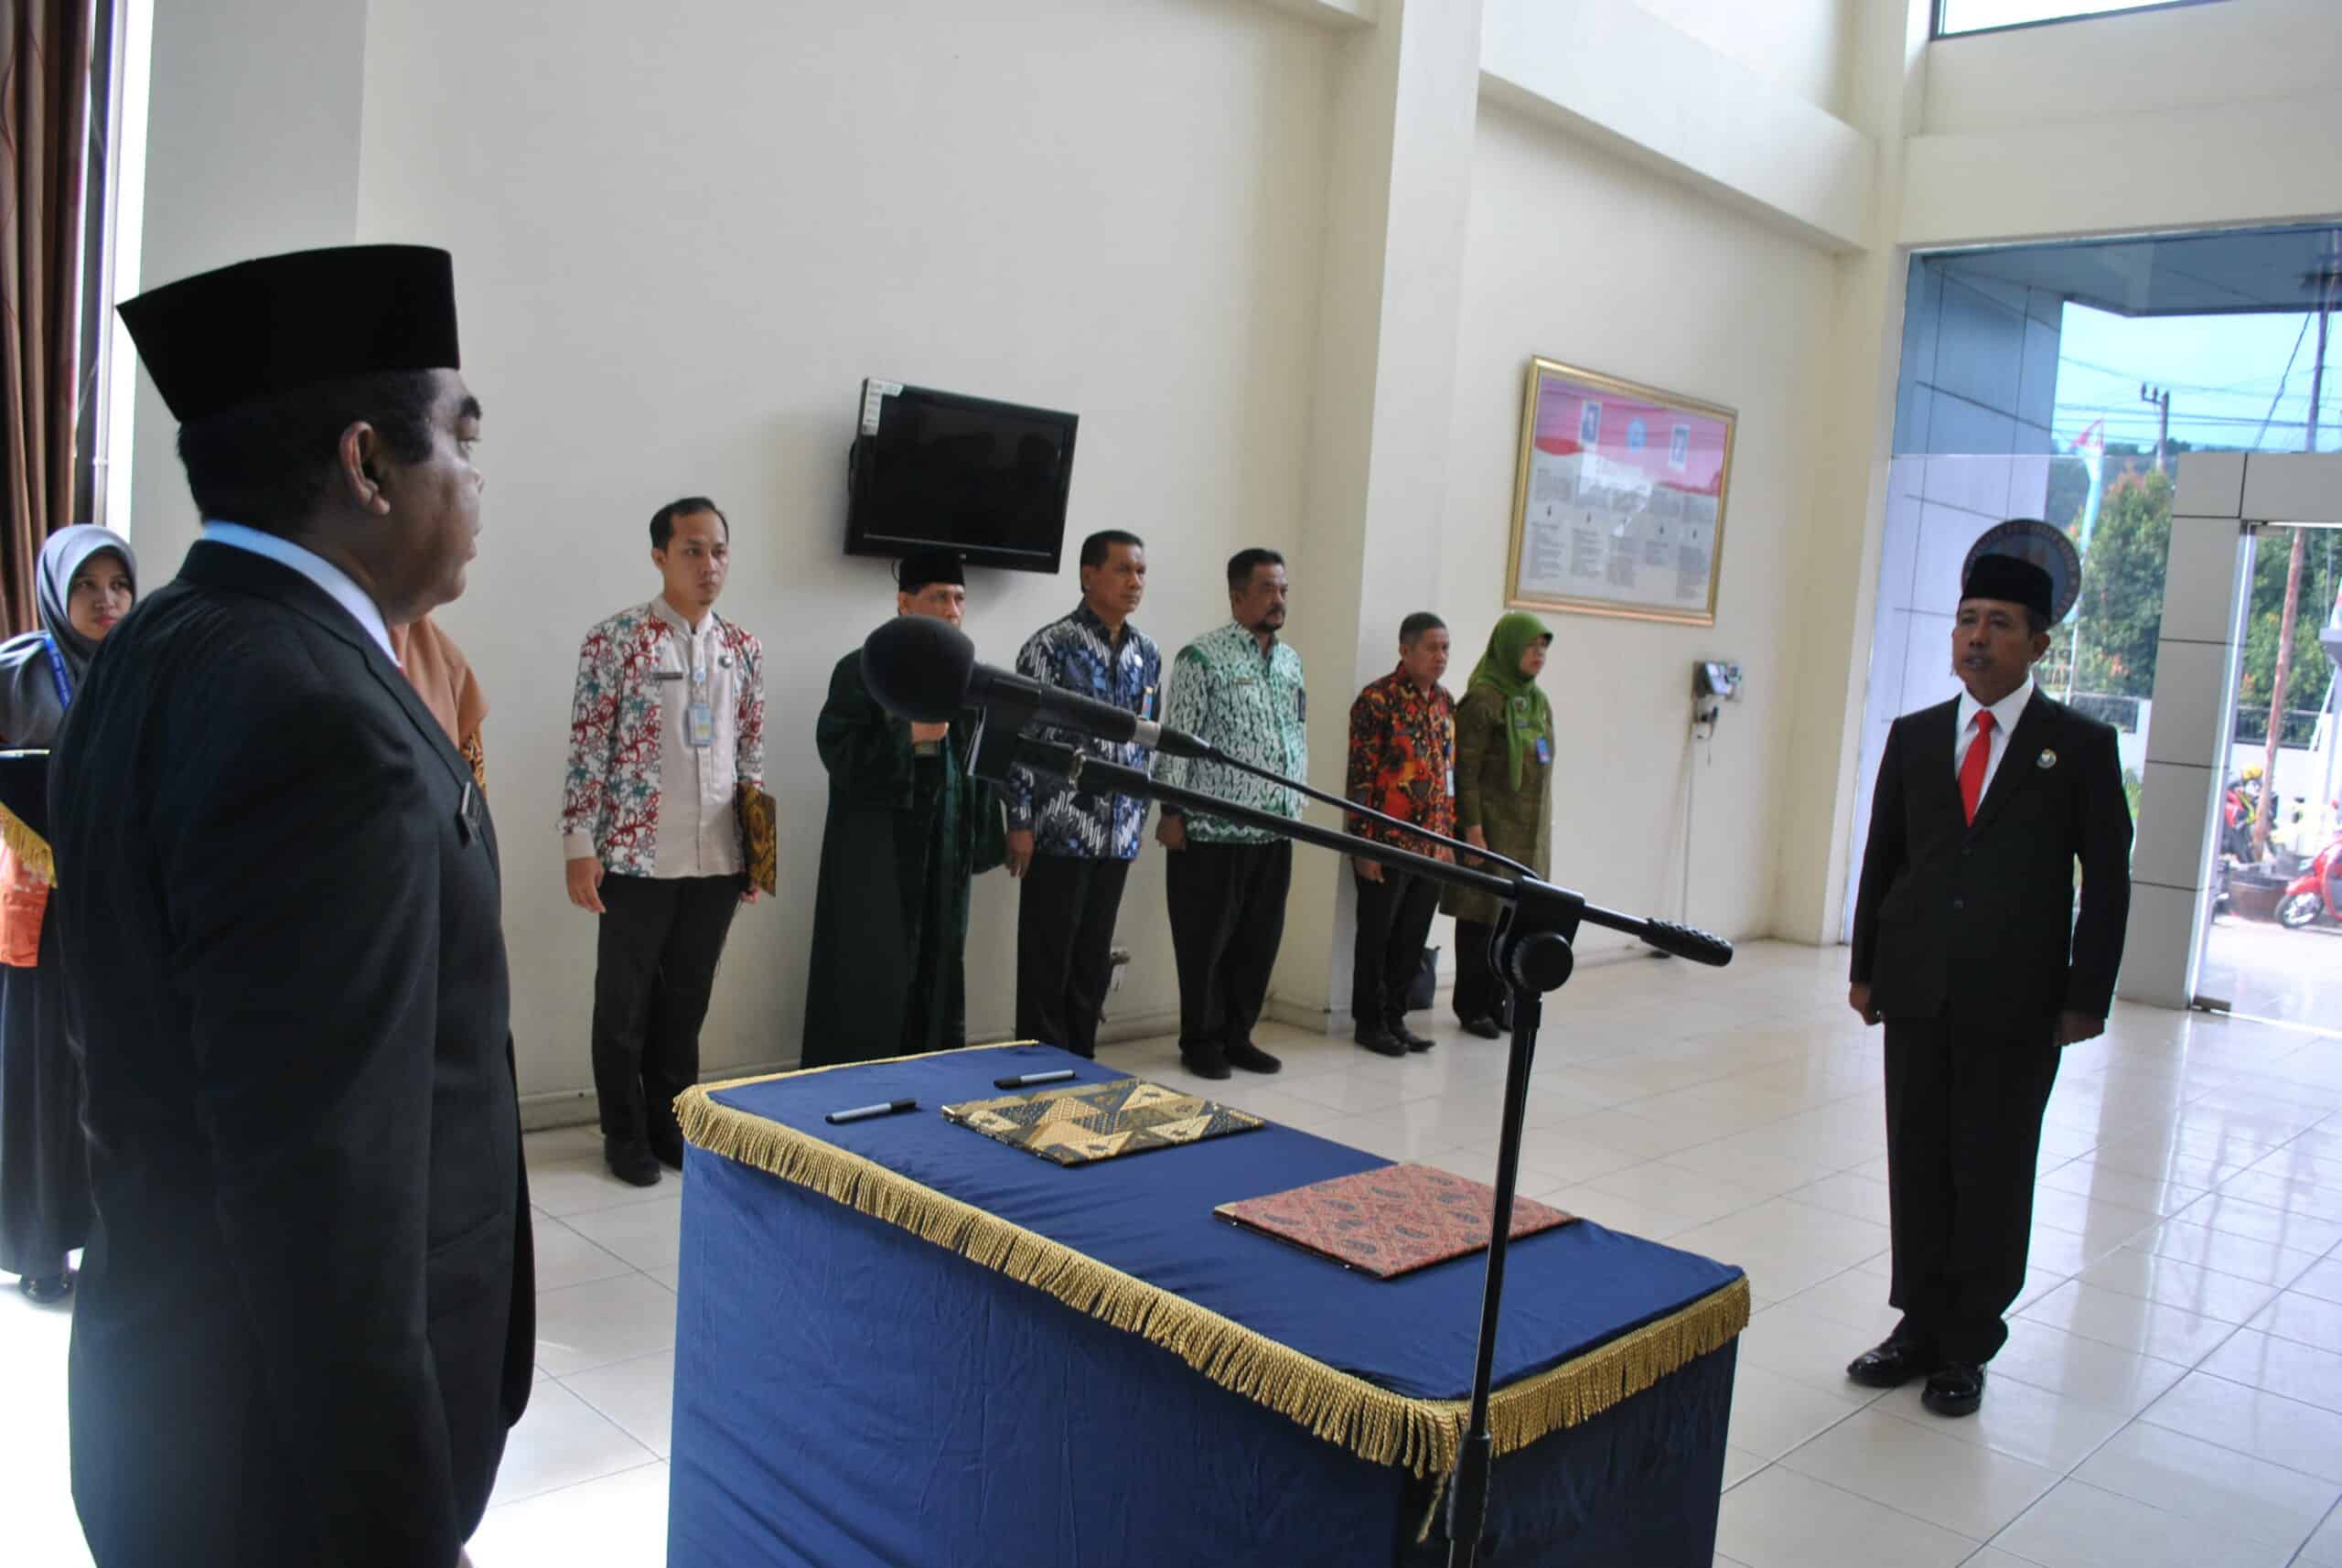 BNNP Kaltim – Samarinda  -  Badan Narkotika Nasional Provinsi (BNNP) Kalimantan Timur  menggelar Pengambilan Sumpah Jabatan dan Pelantikan Pejabat Eselon IV Kasi pemberantasan BNNK Kota Balikpapan di Lingkup BNNP Kalimantan Timur .